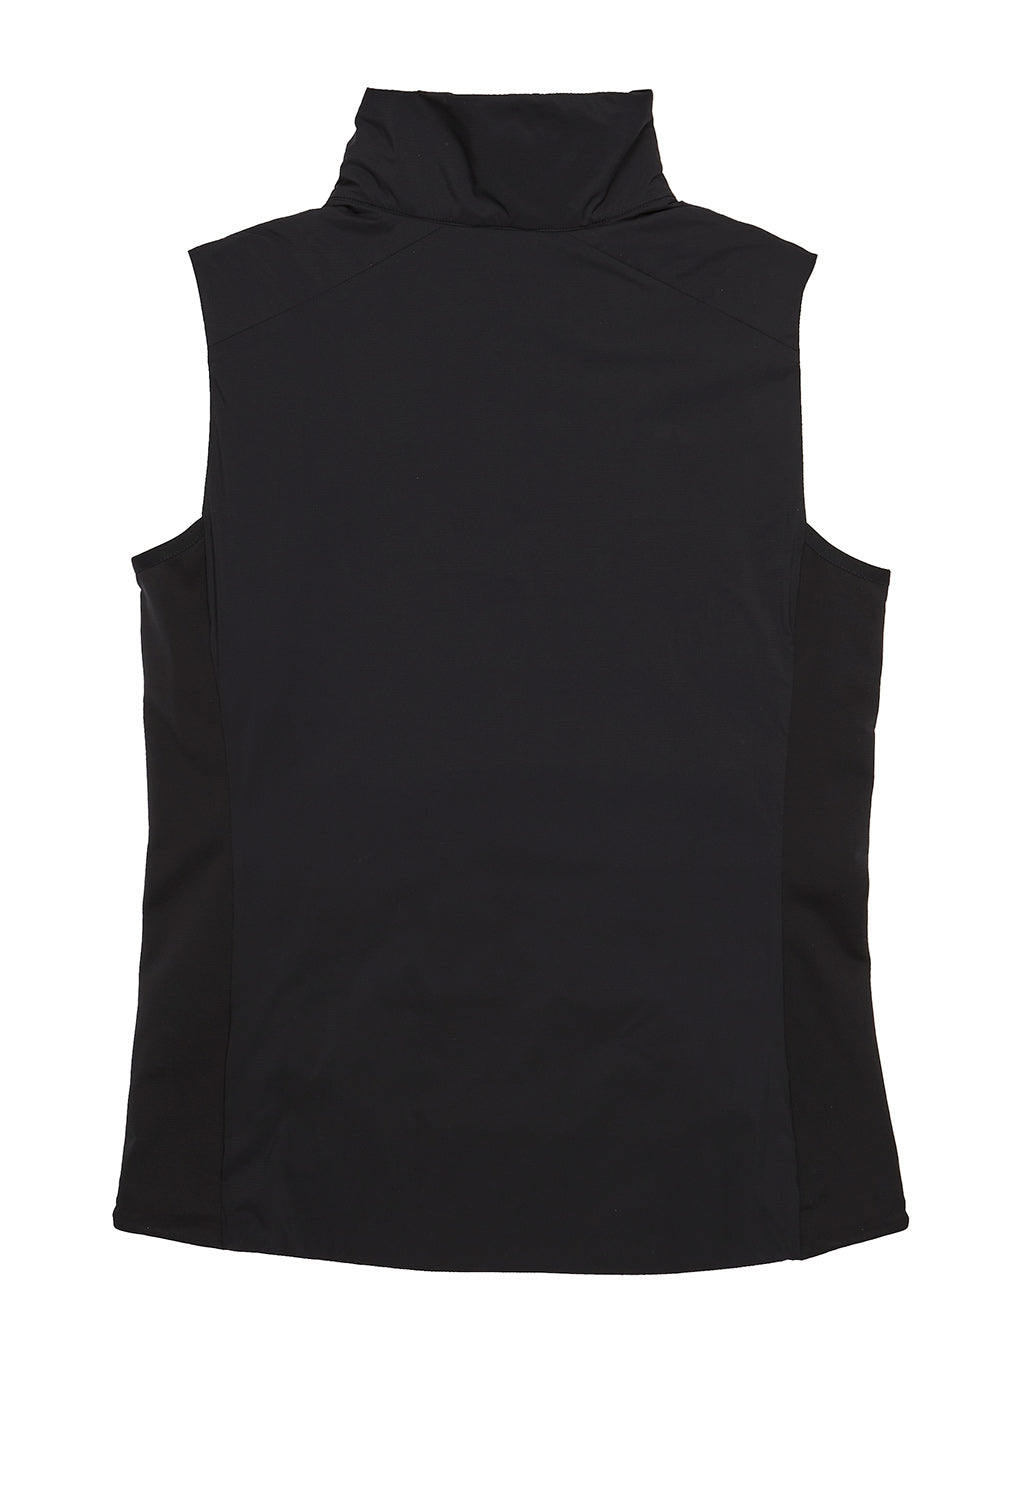 Arc'teryx Women's Atom Vest - Black